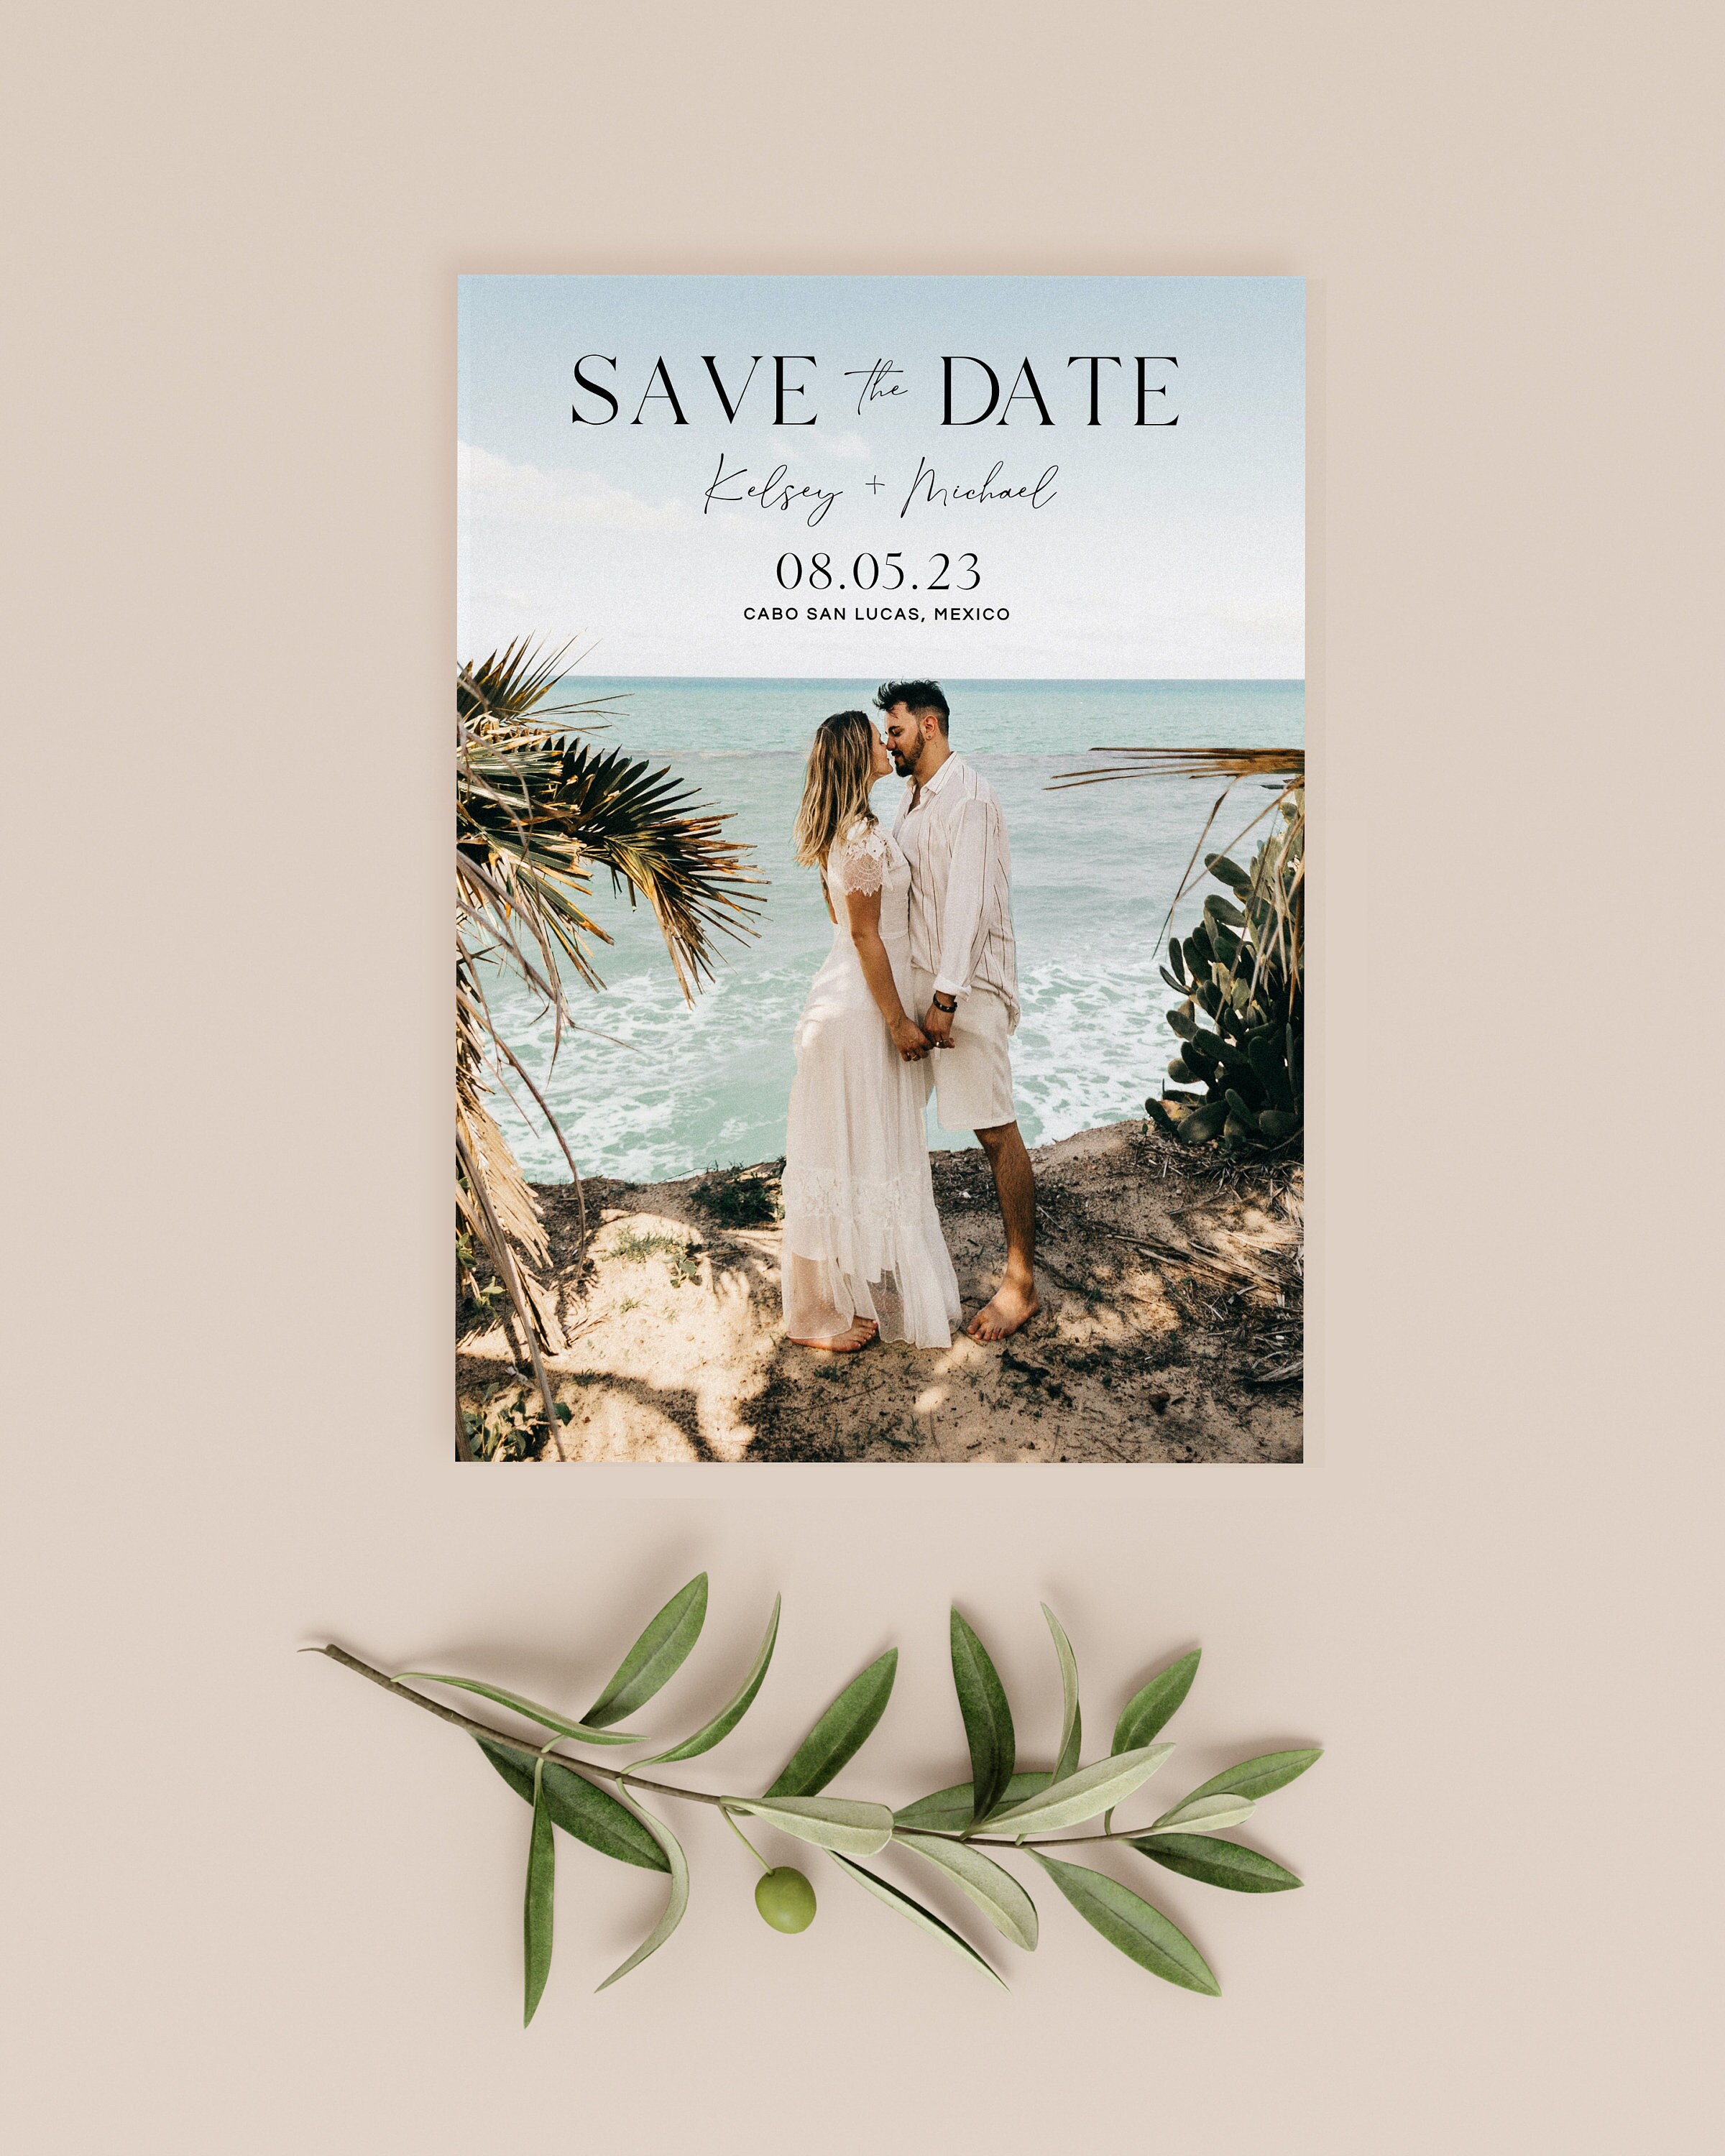 SAVE THE DATE## NAVYA♥️SREERAJ... - Frame Wedding company | Facebook